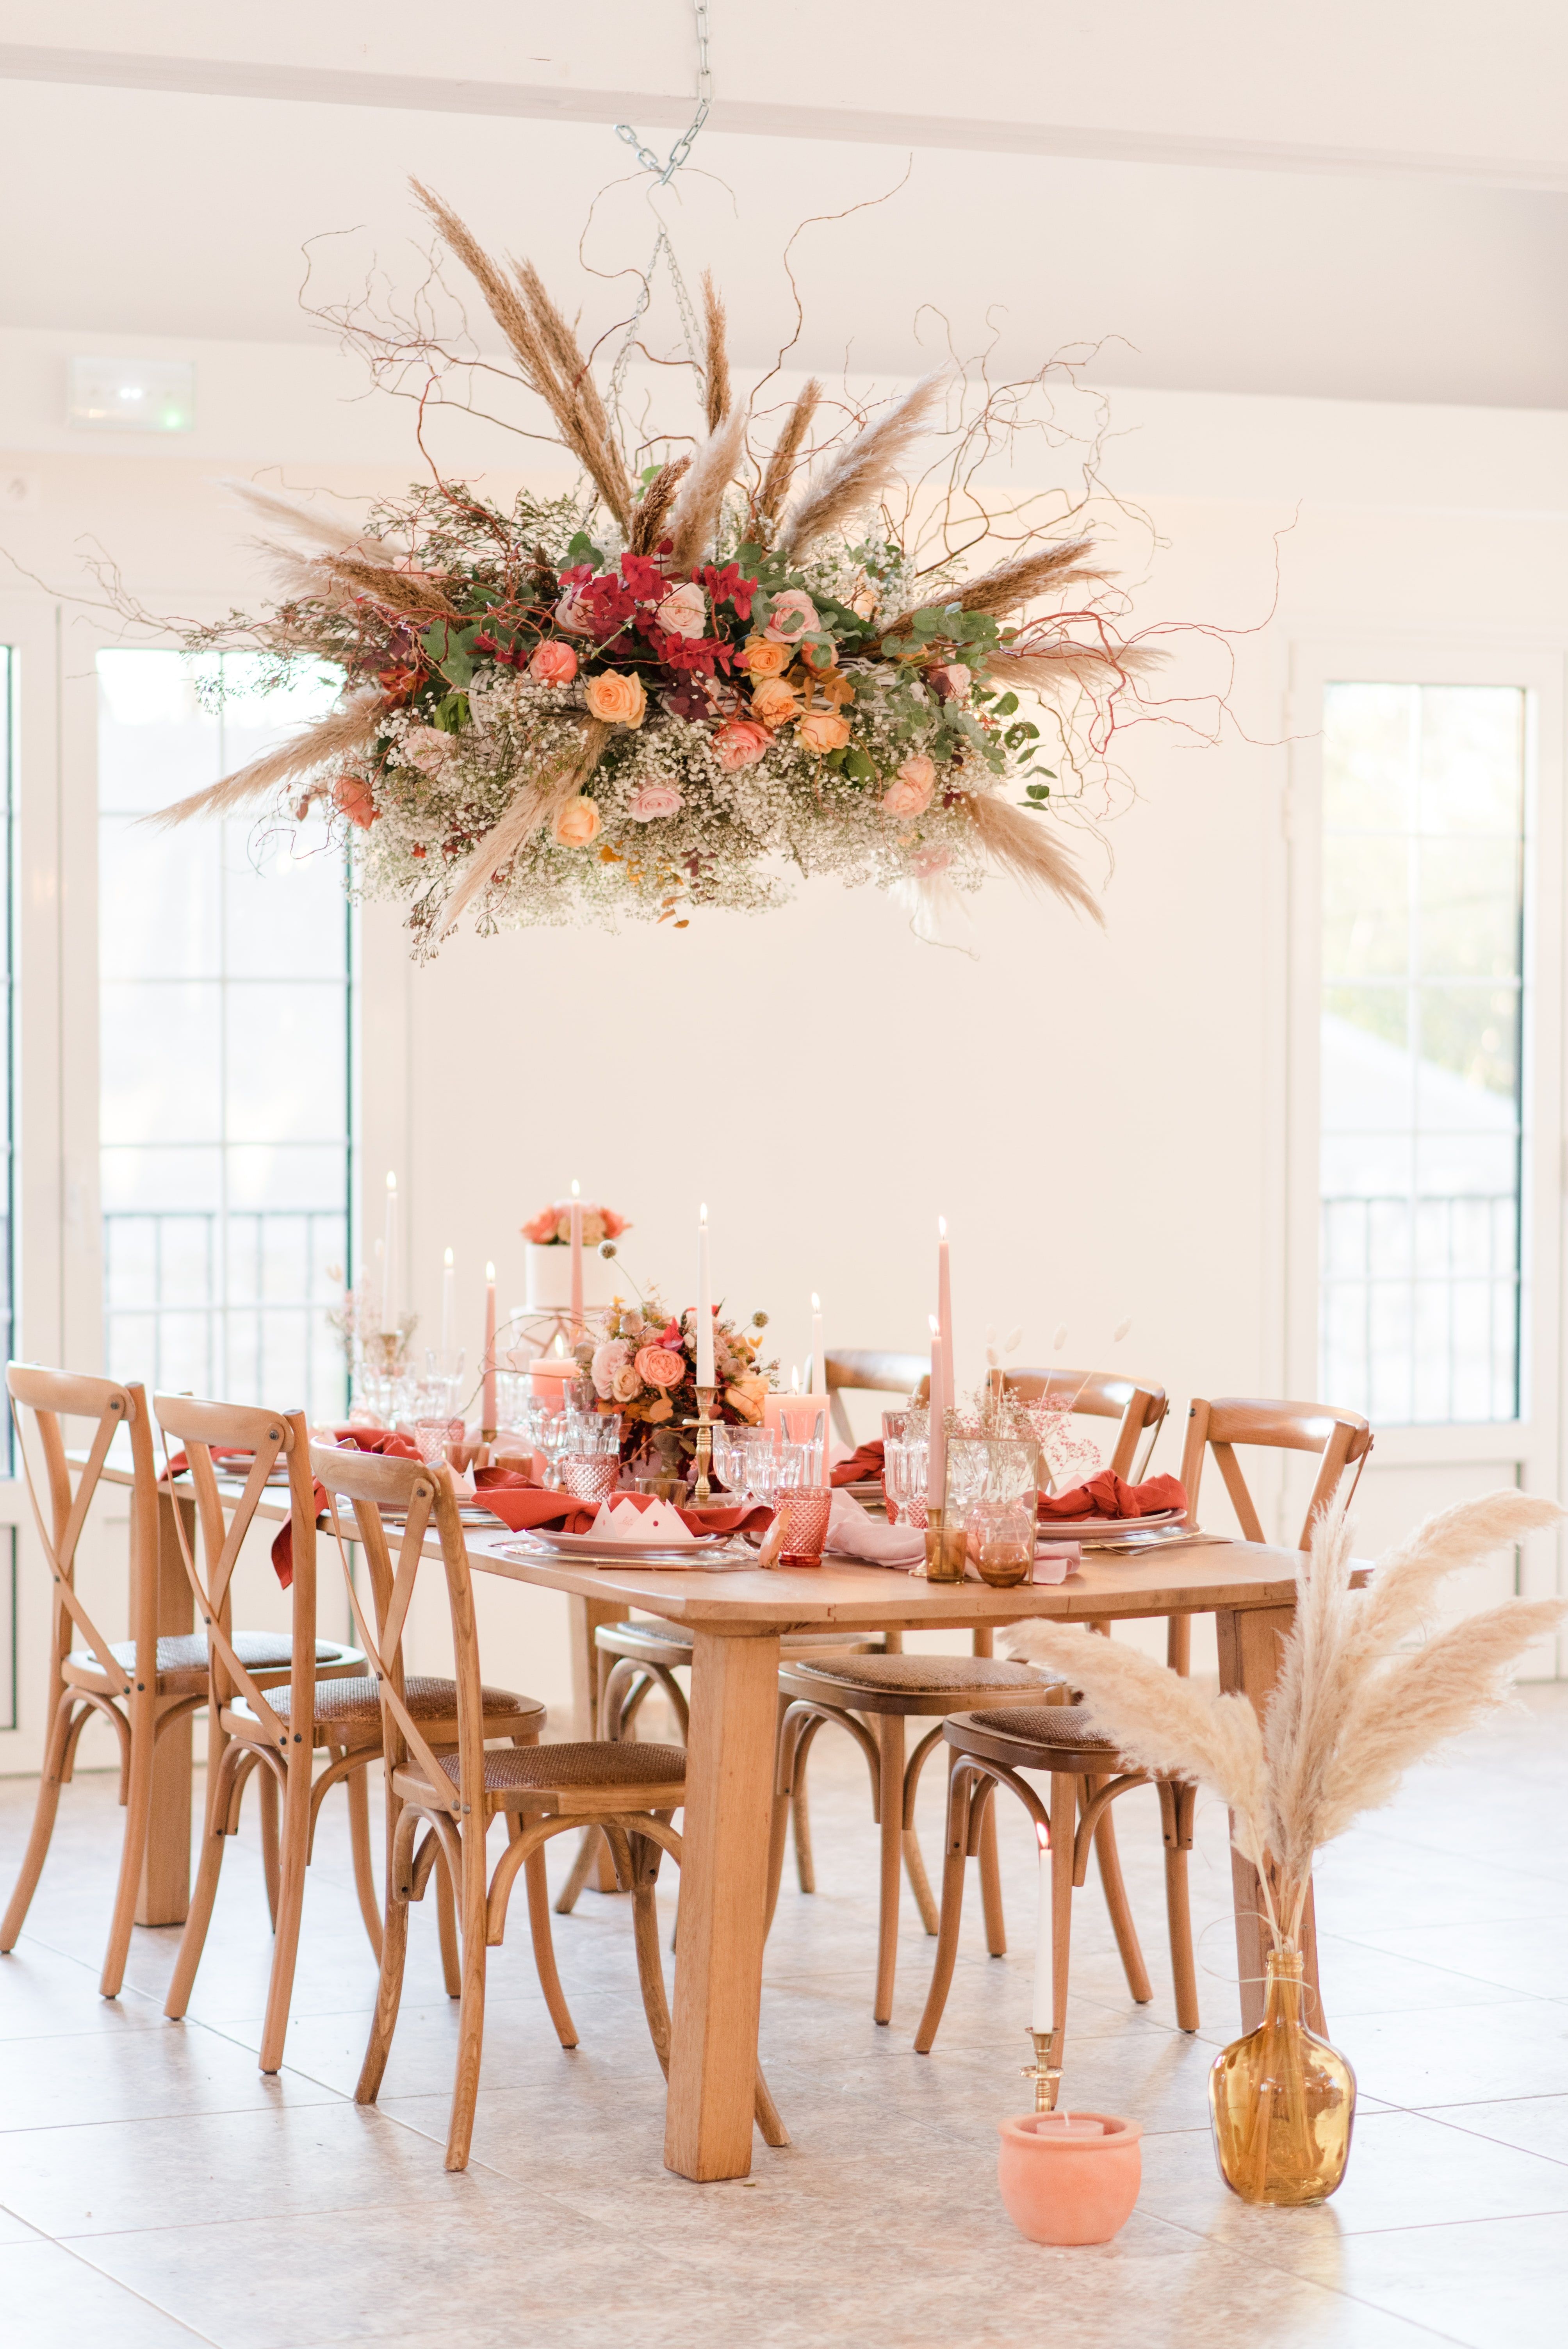 Ceiling wedding flower installation hanging above dinner table